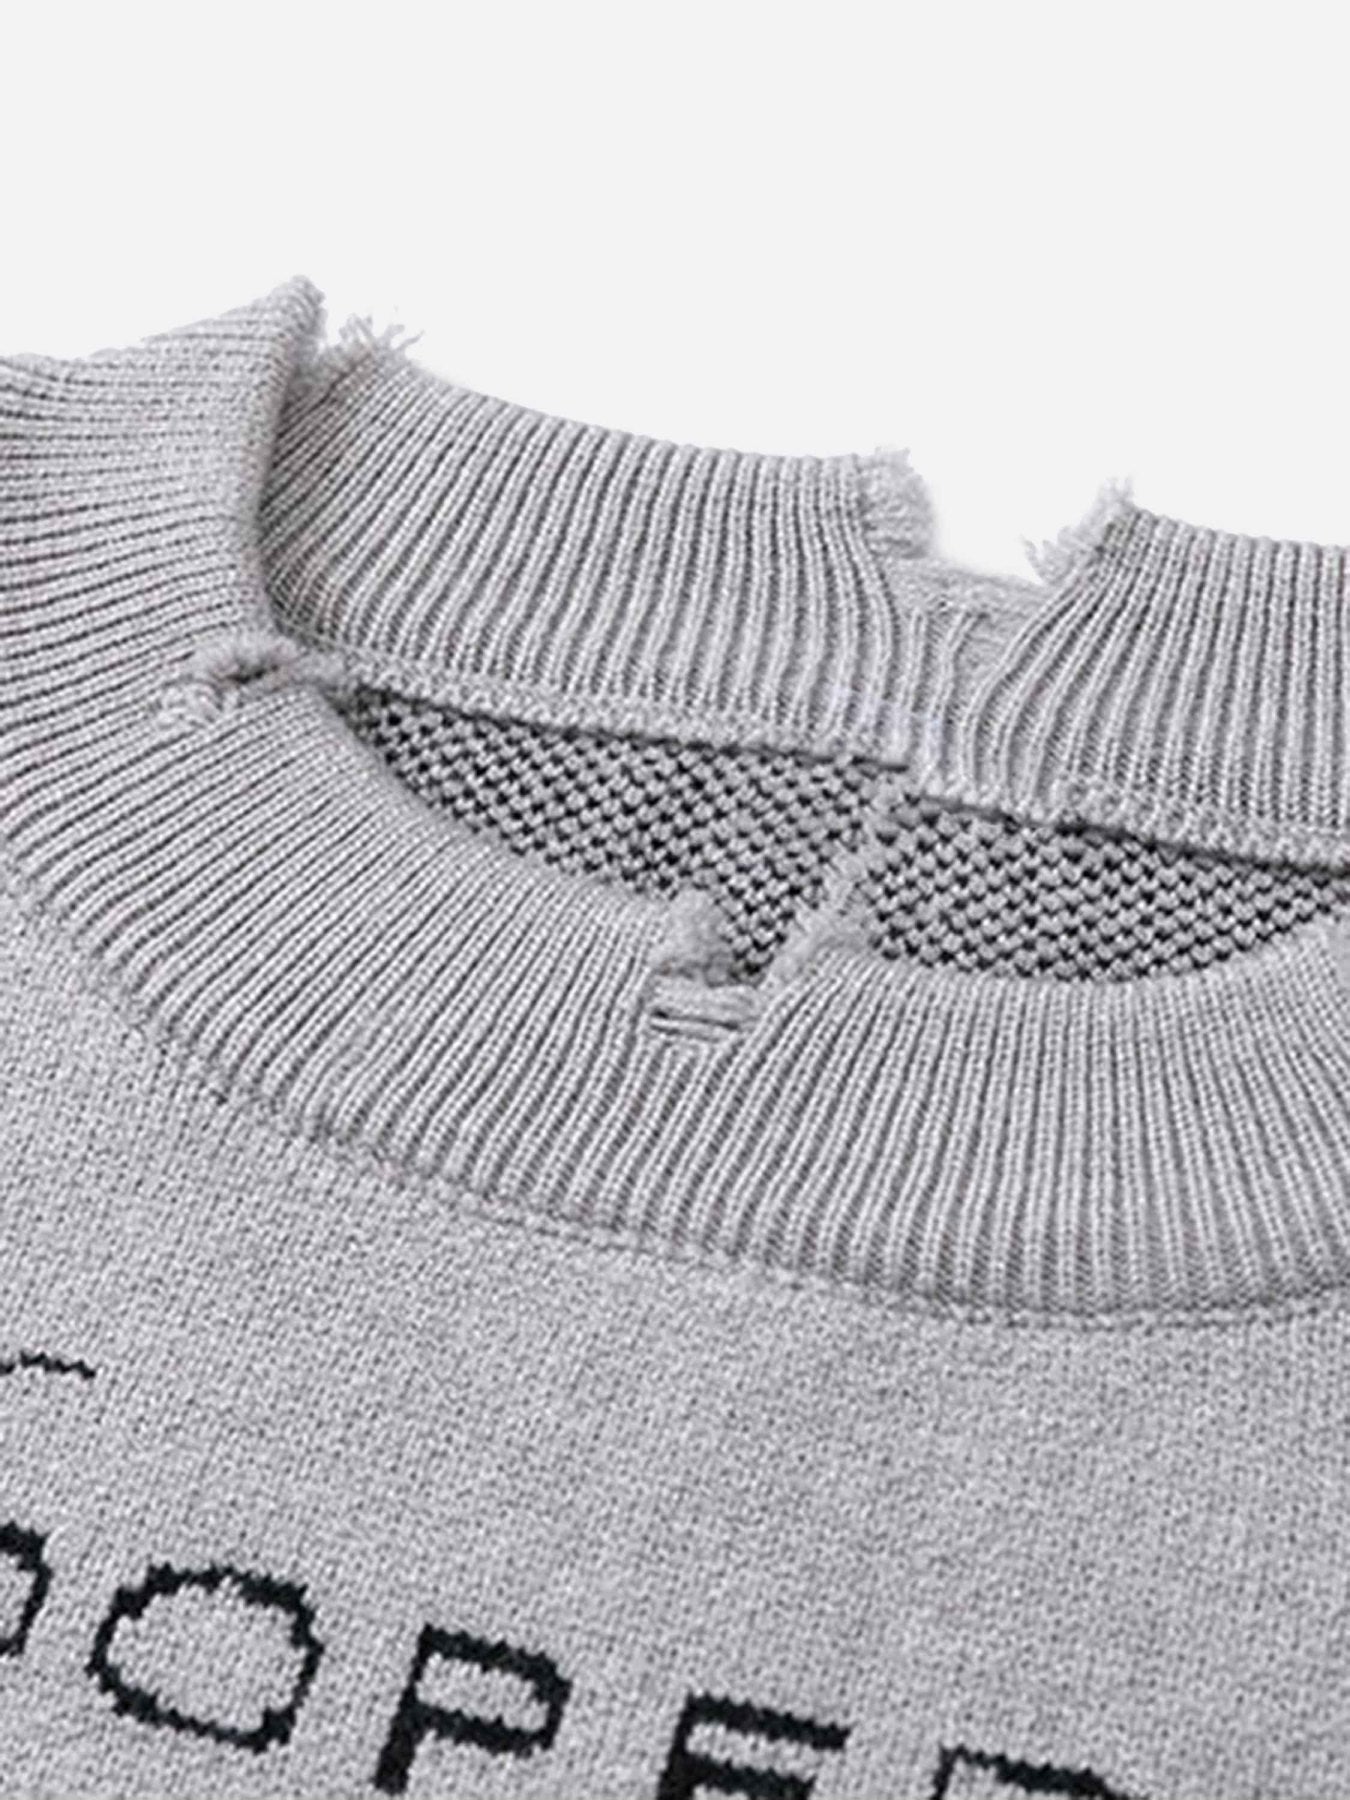 The Supermade Vintage Burlap Racing Suit Letter Jacquard Sweater